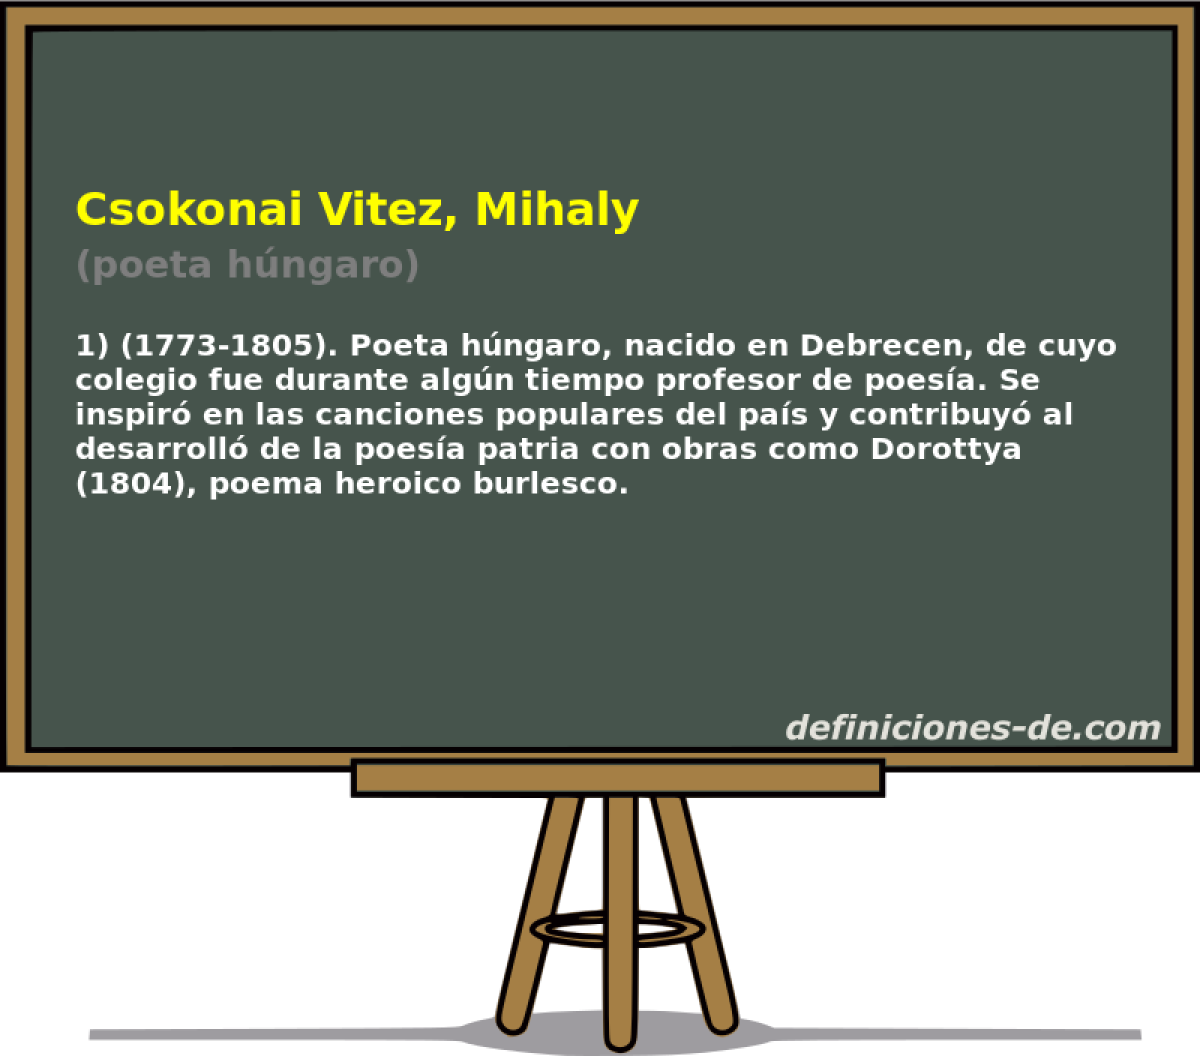 Csokonai Vitez, Mihaly (poeta hngaro)